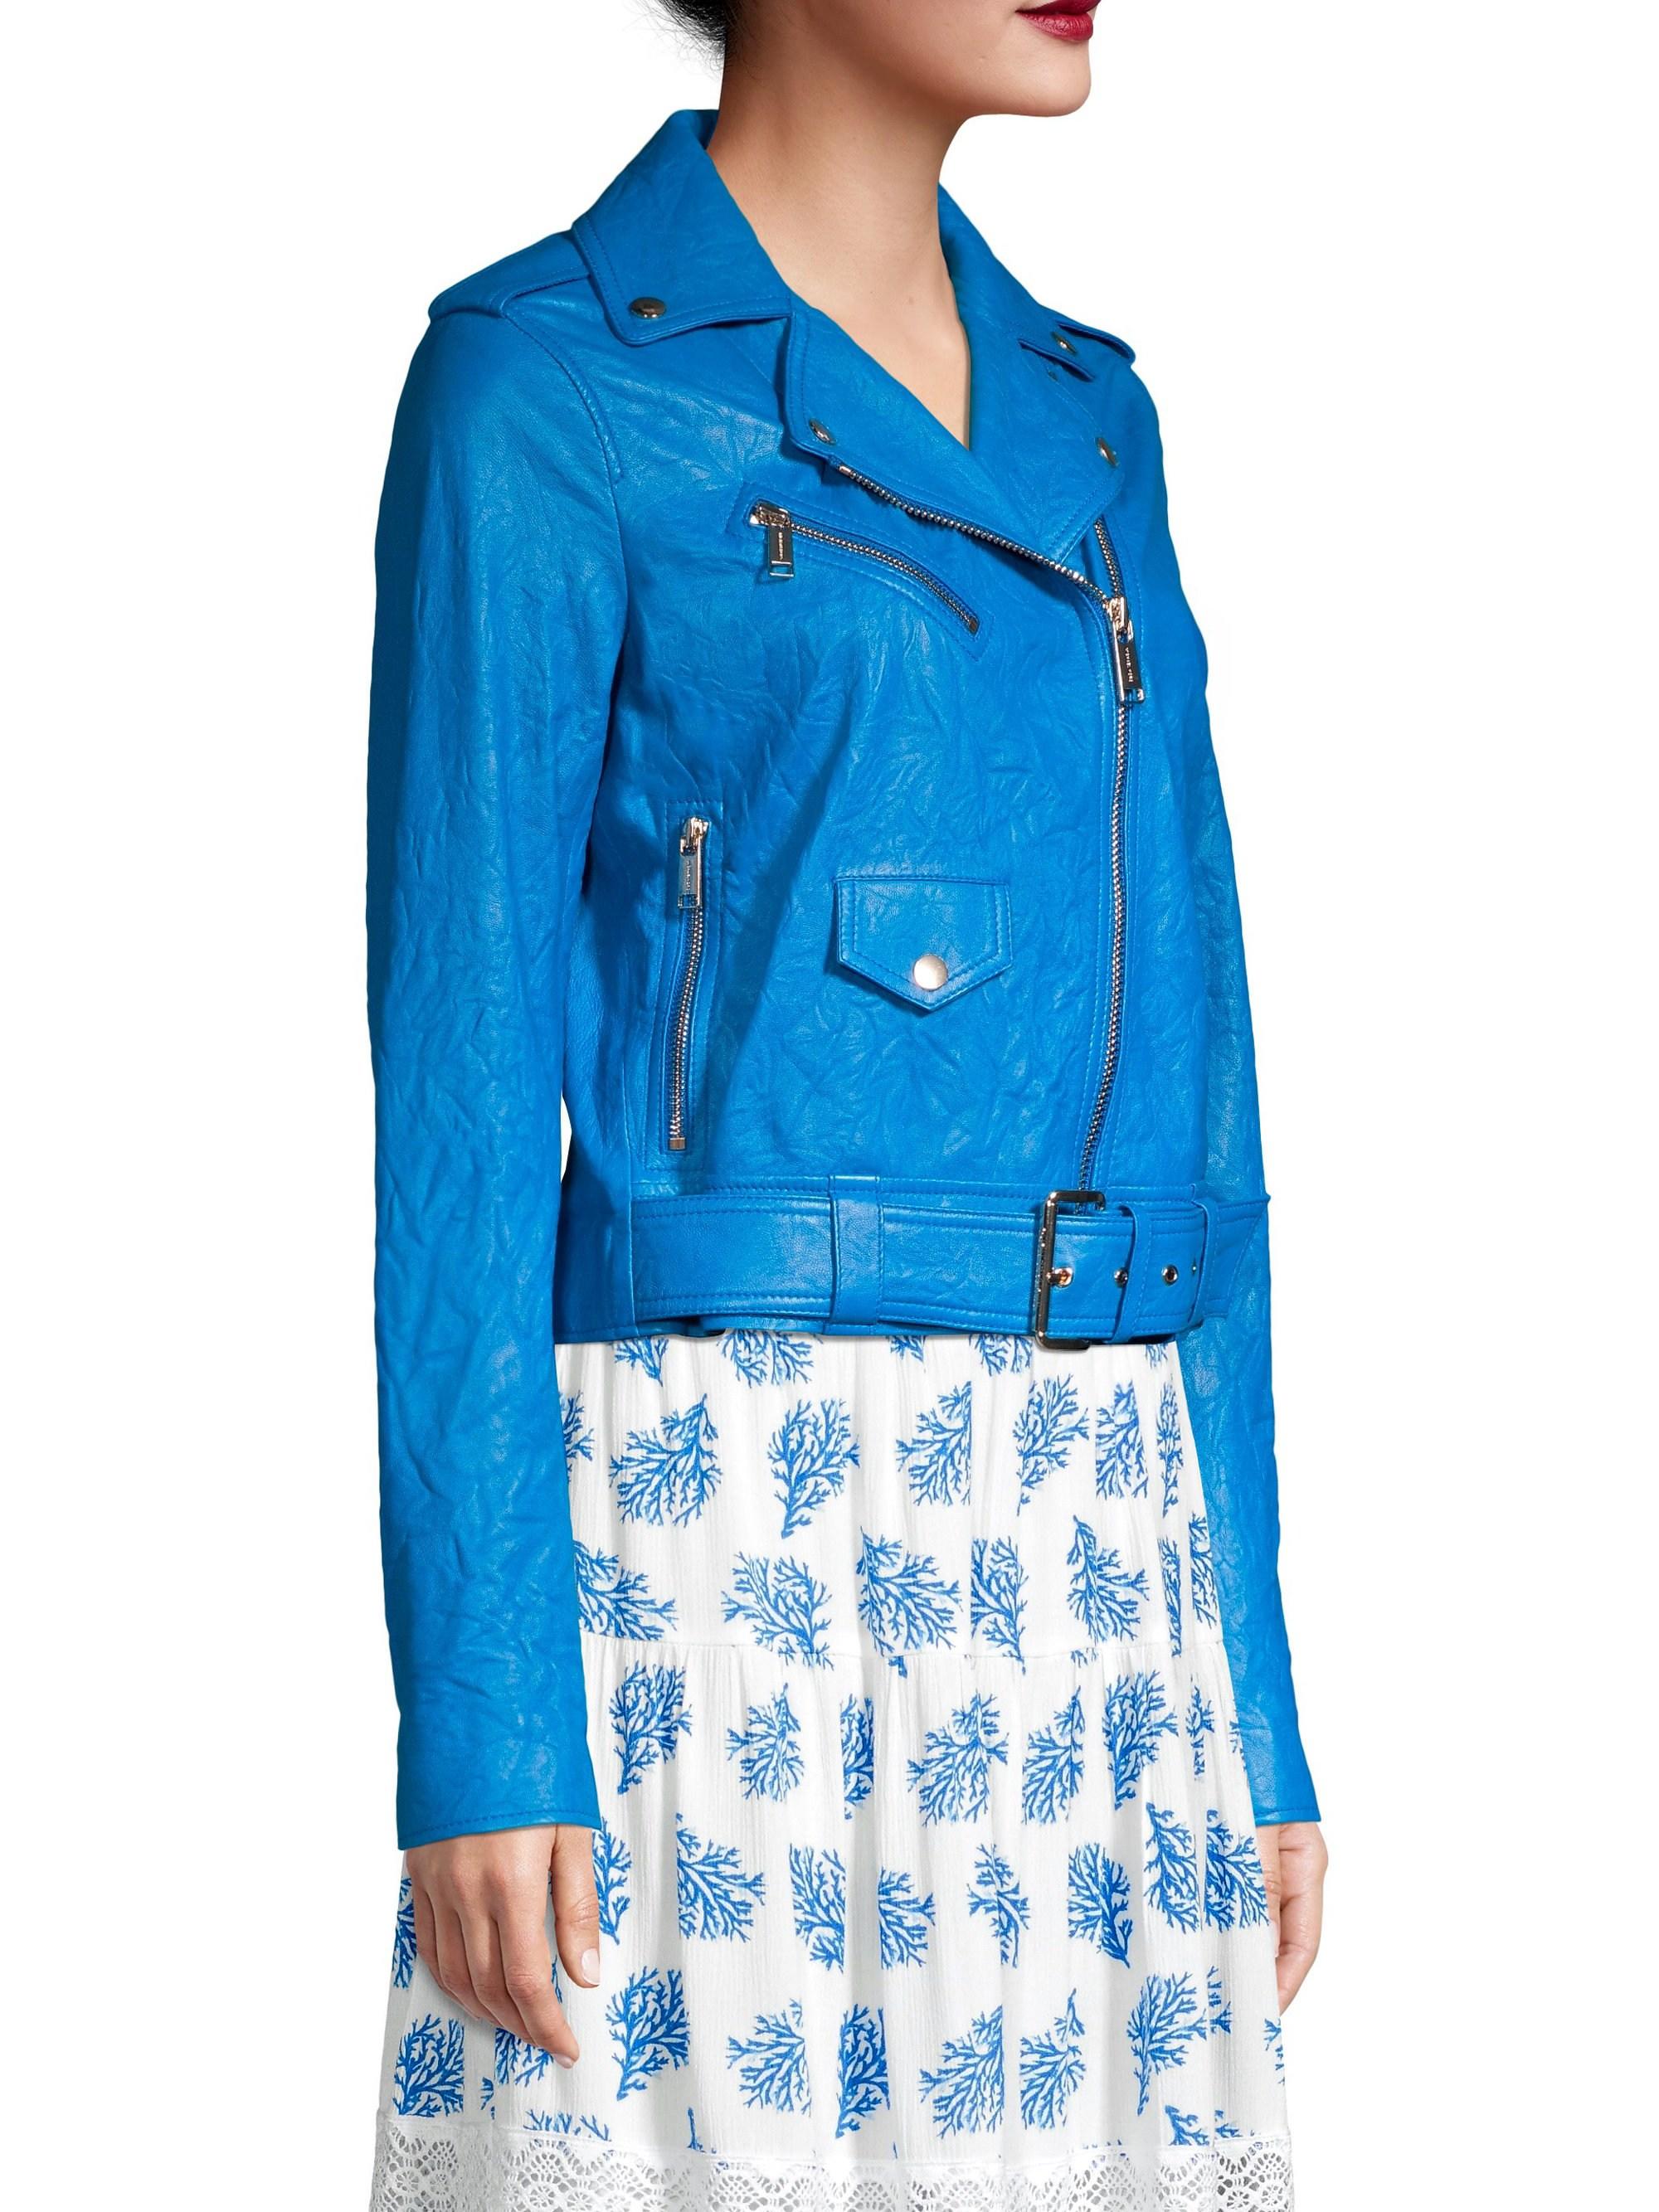 Michael Kors Soft Crinkle Leather Moto Jacket in Blue | Lyst